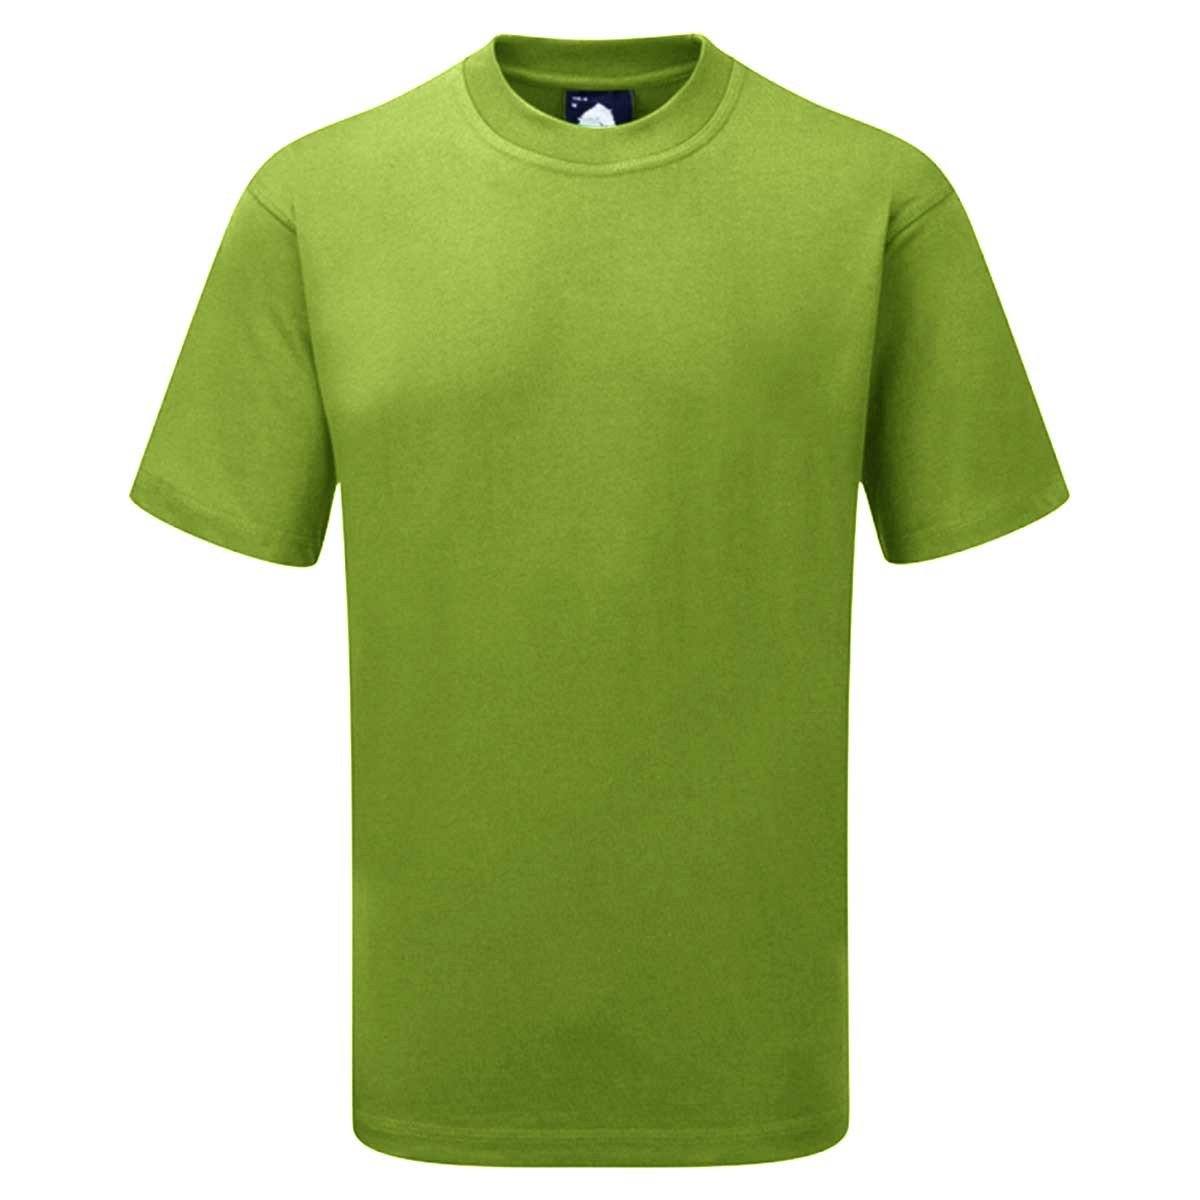 Jackson Short Sleeve B Quality Tee Shirt B Quality Image Parrot Green S 